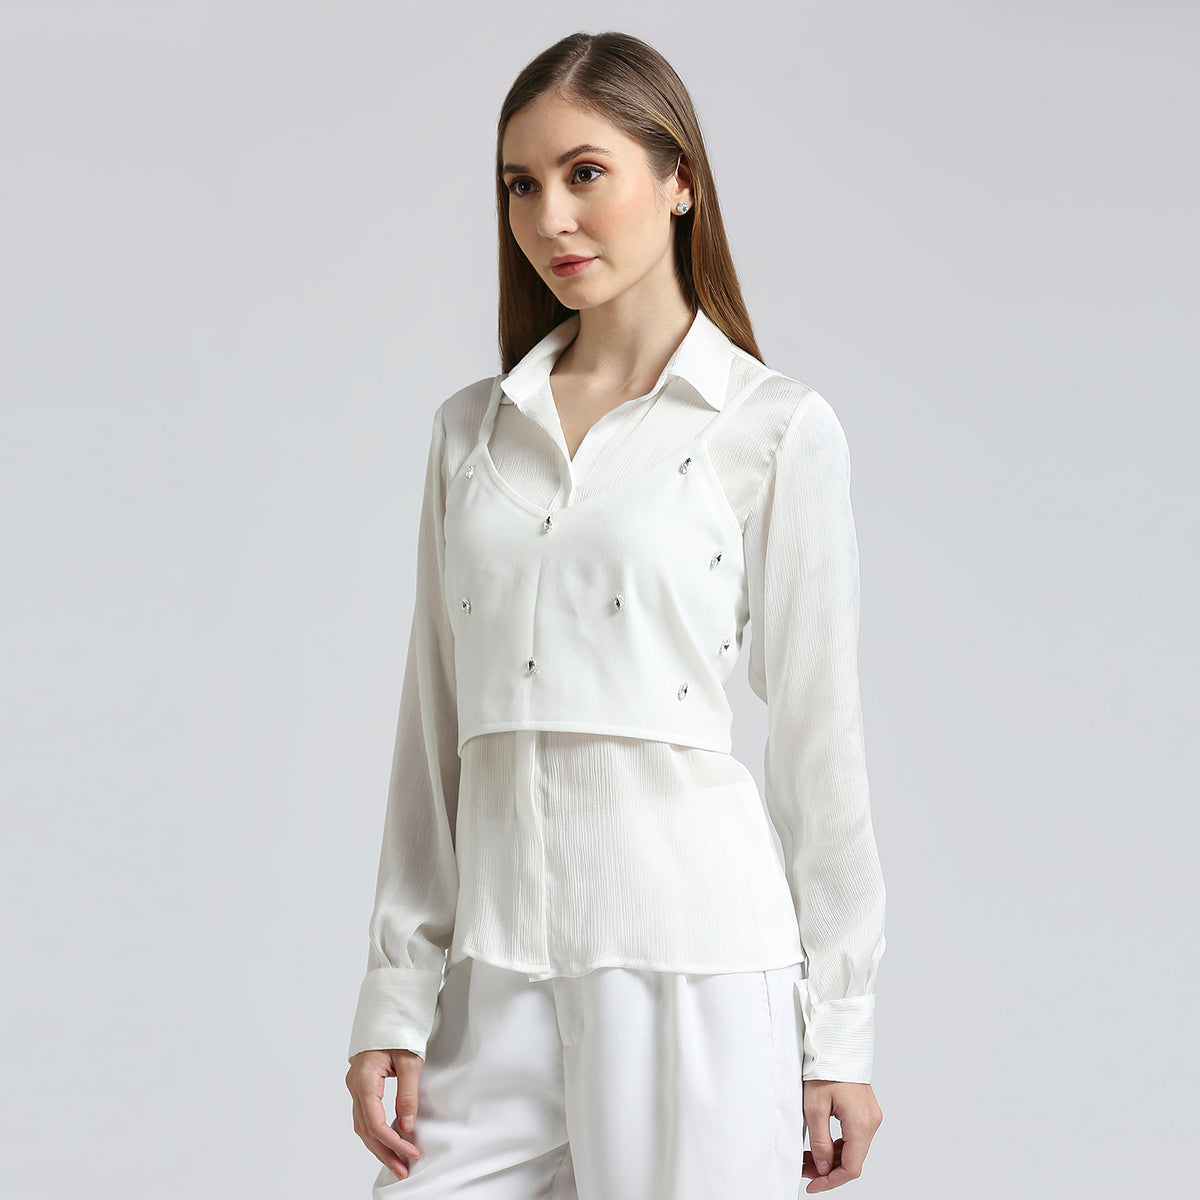 White Soft Chiffon Shirt With Embellished Crop